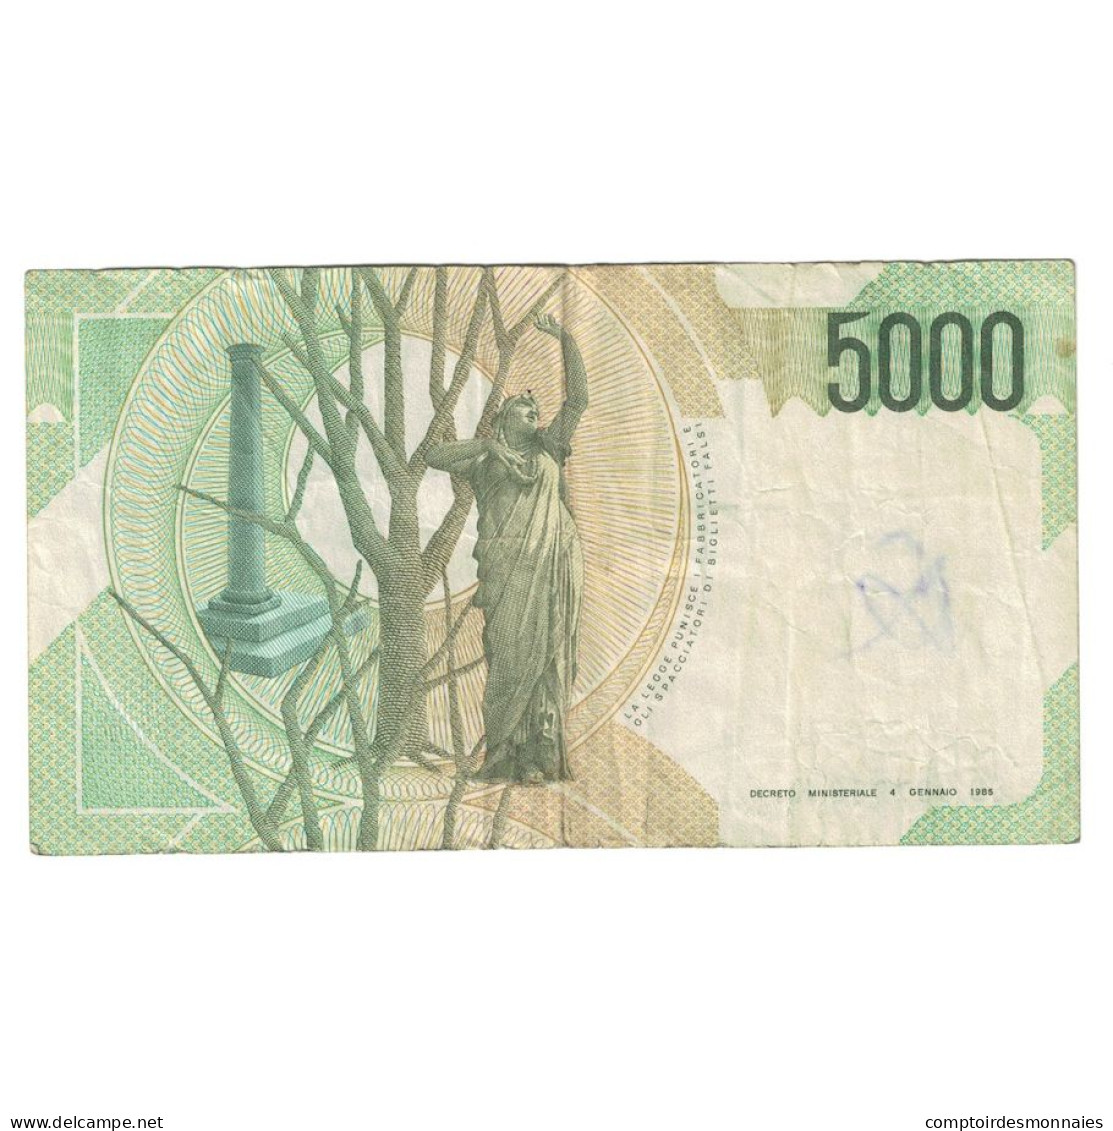 Billet, Italie, 5000 Lire, 1945, KM:111c, TB - 5.000 Lire